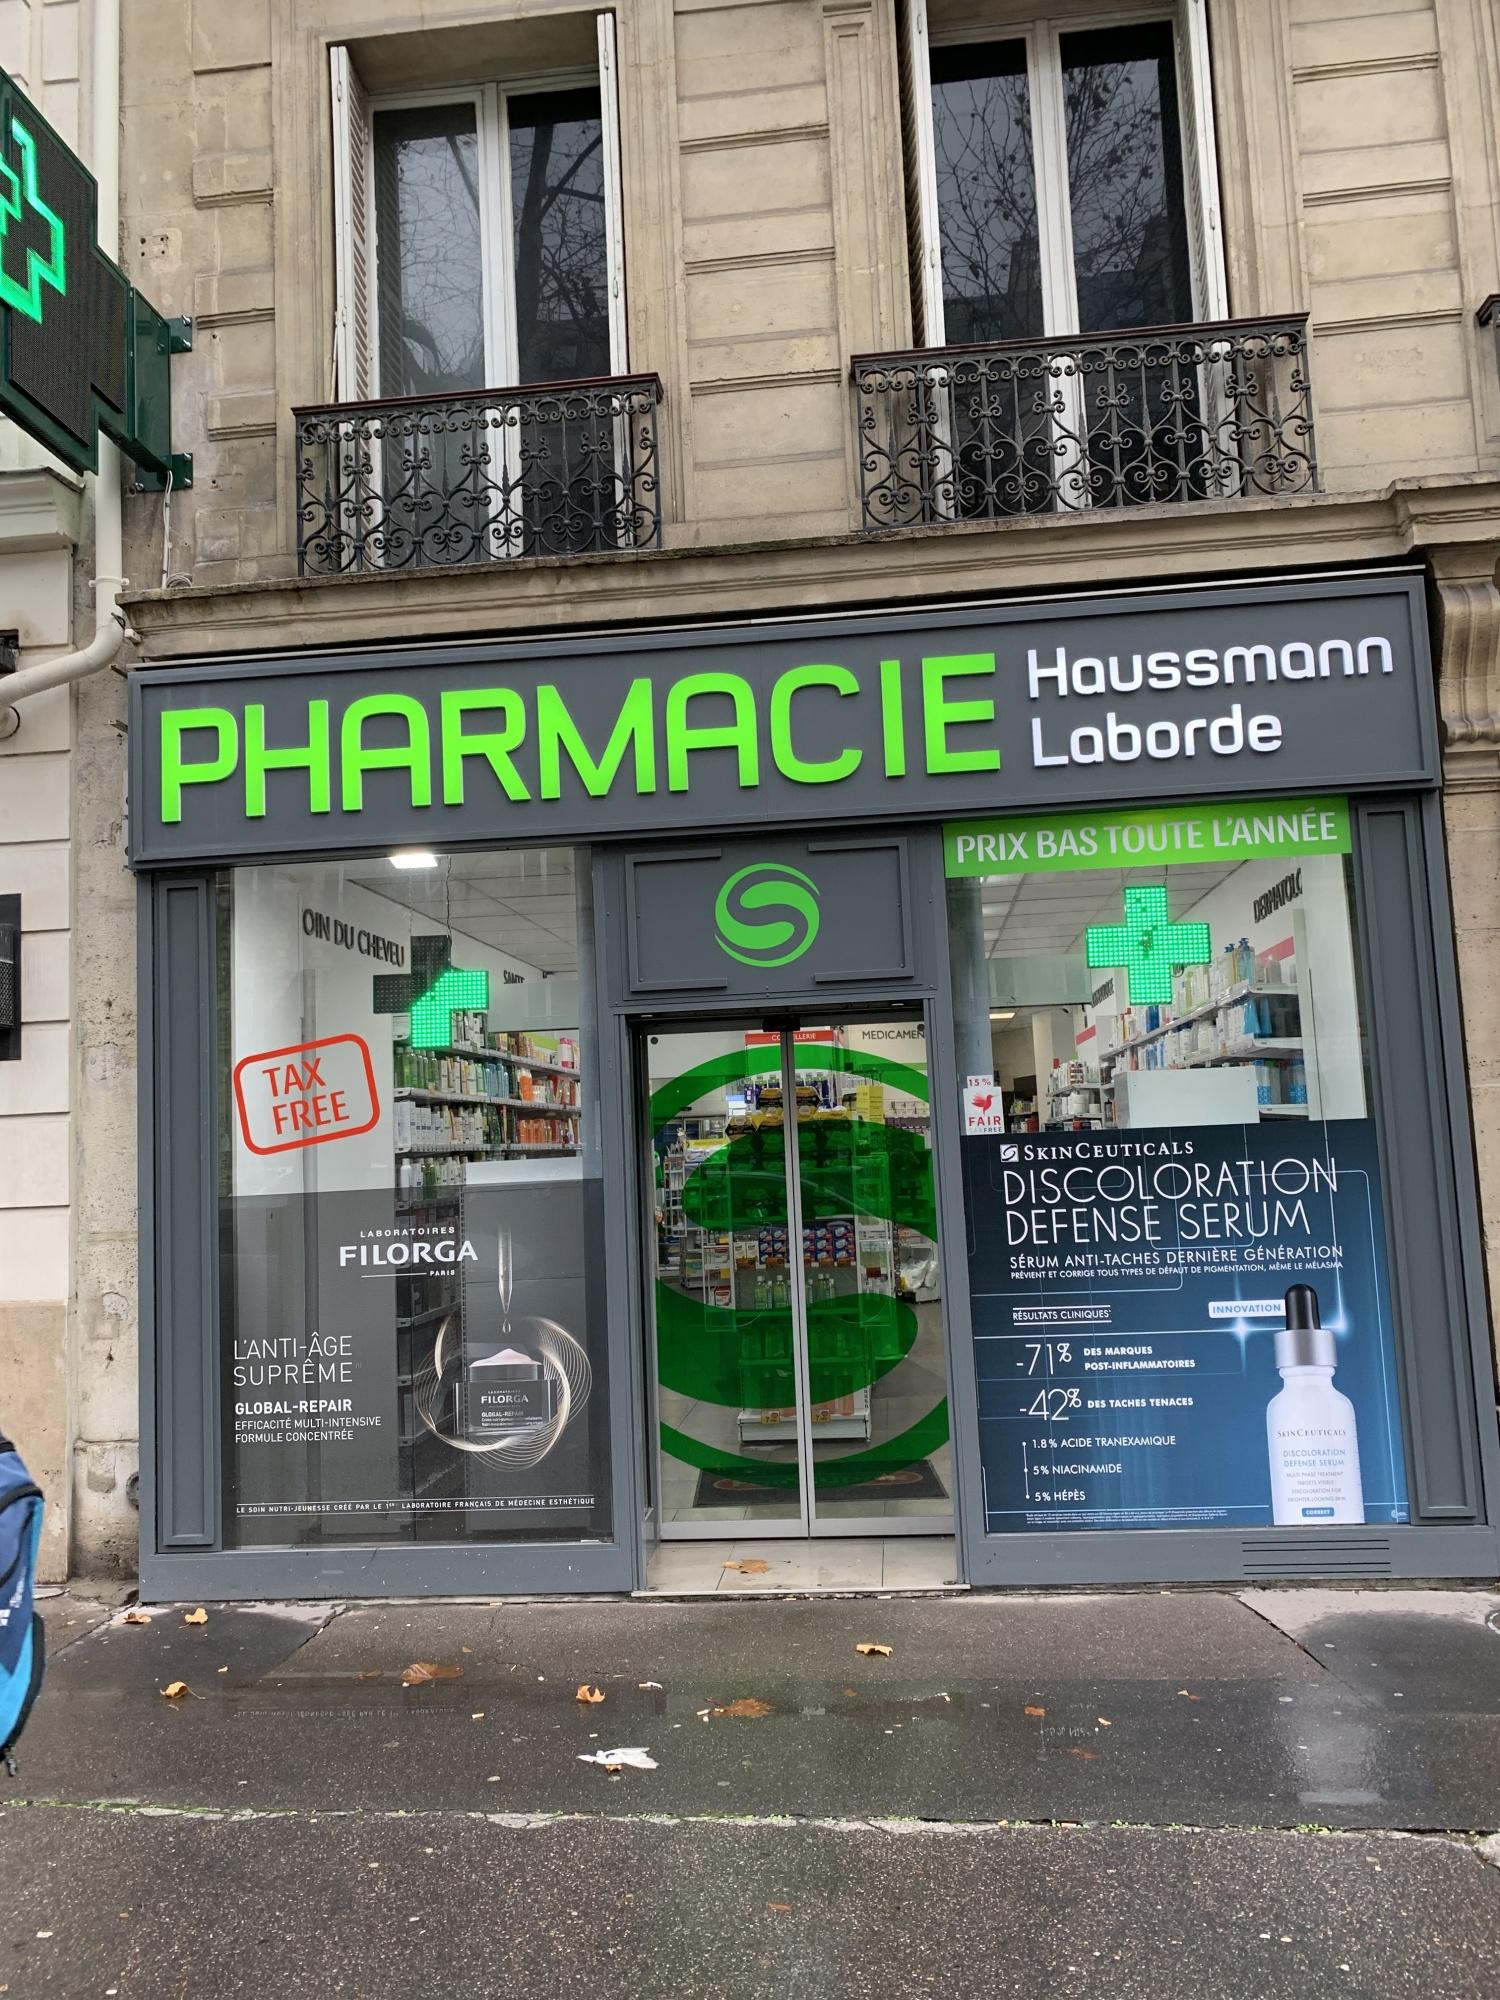 ???? Pharmacie Haussmann Laborde I Paris 8ème Paris